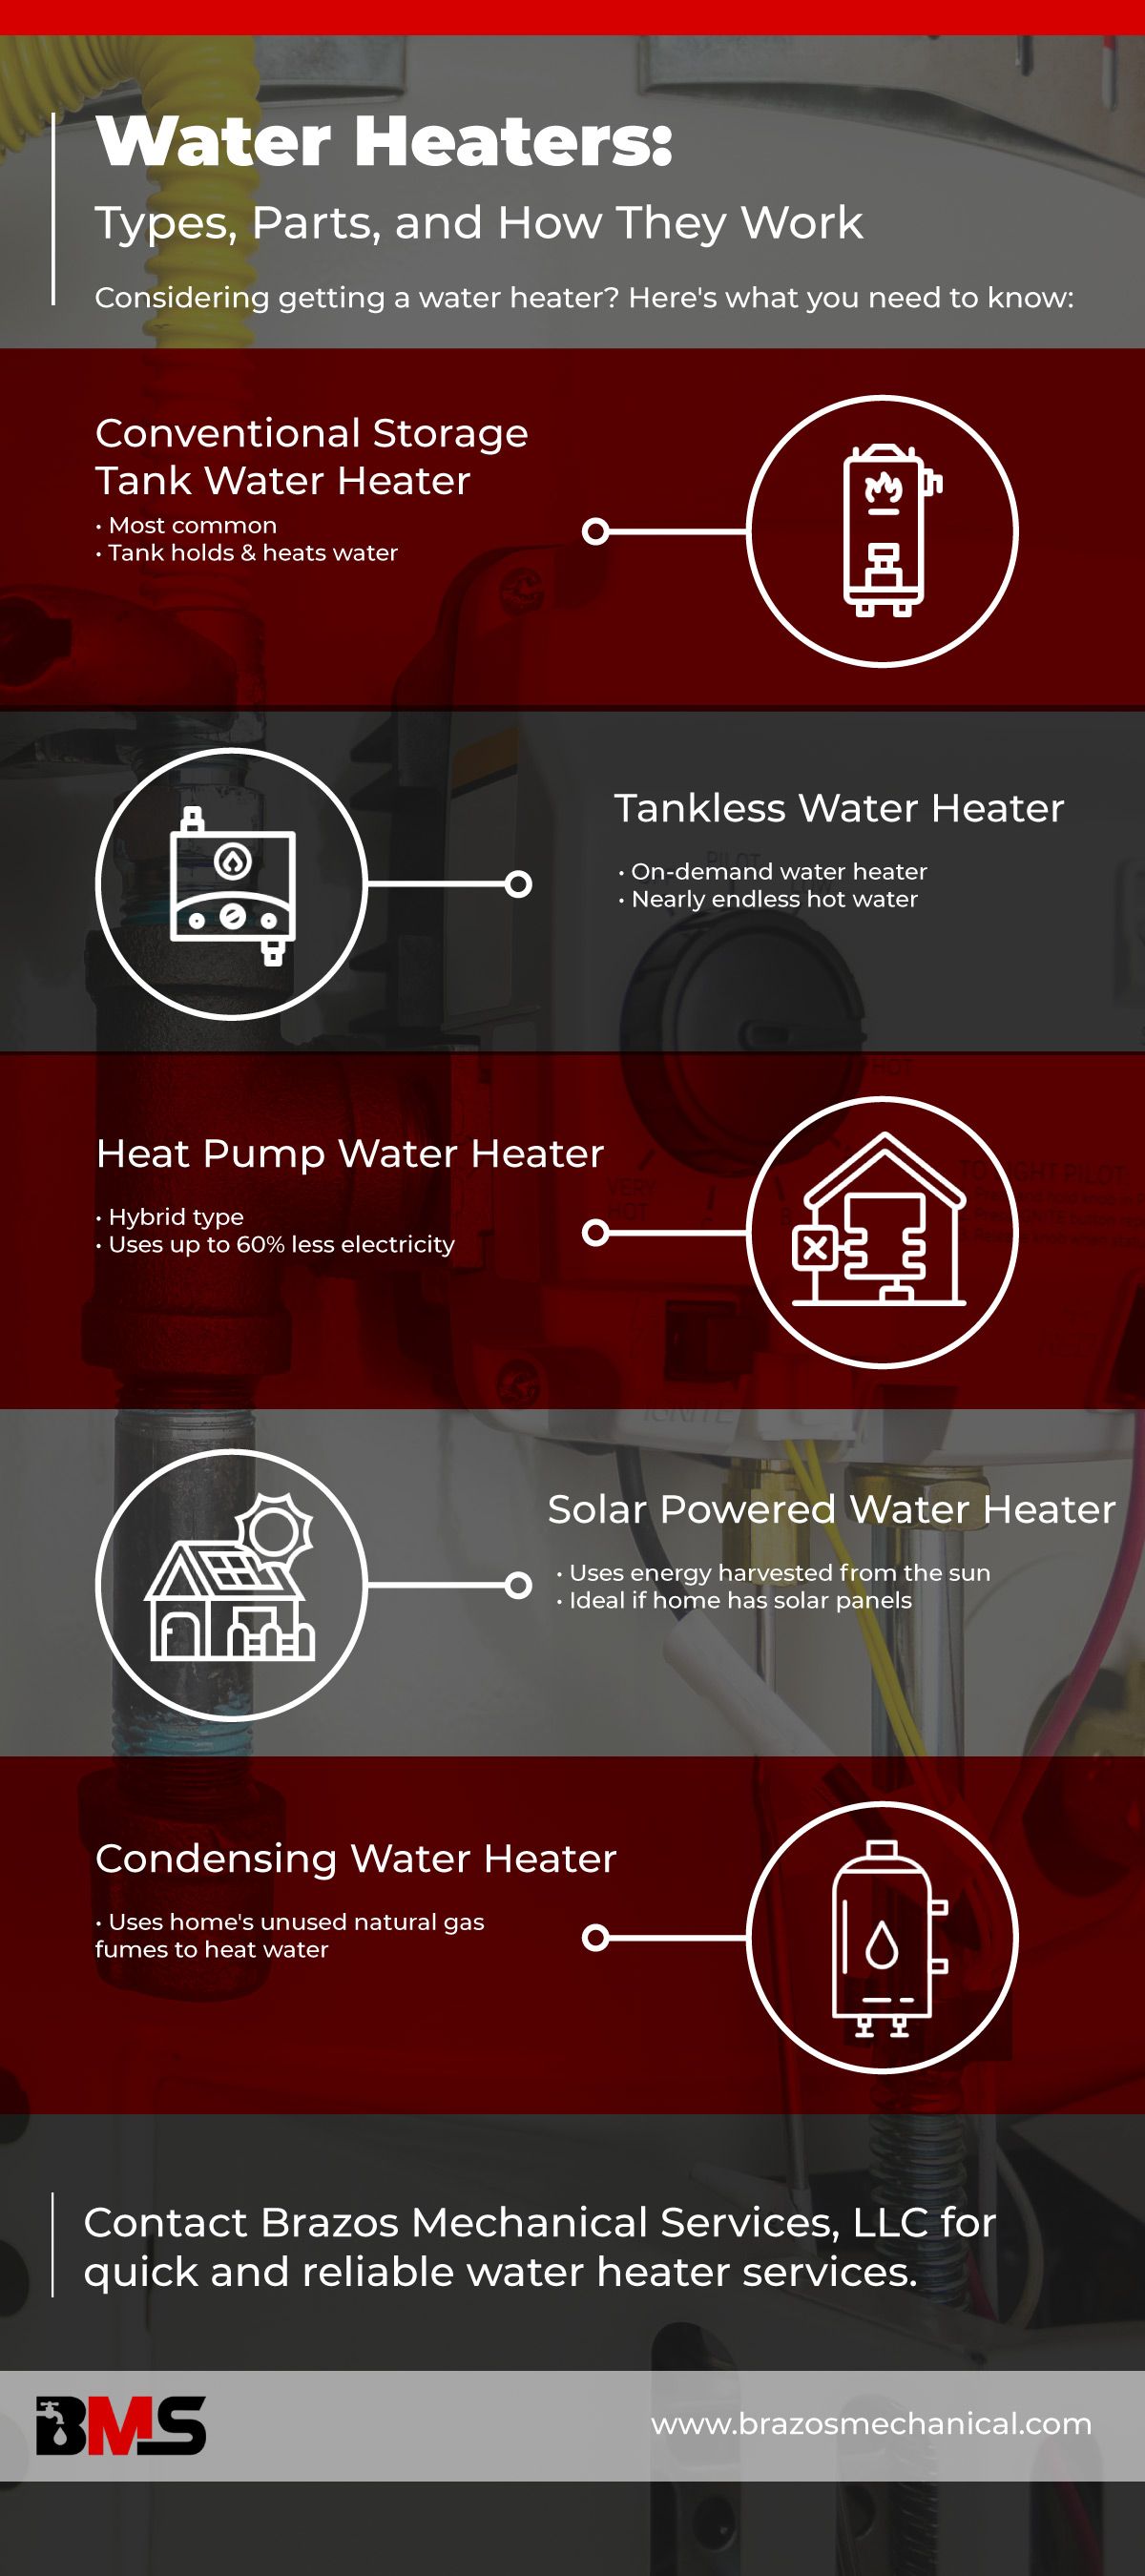 BMS-Water-Heater-IG.jpg